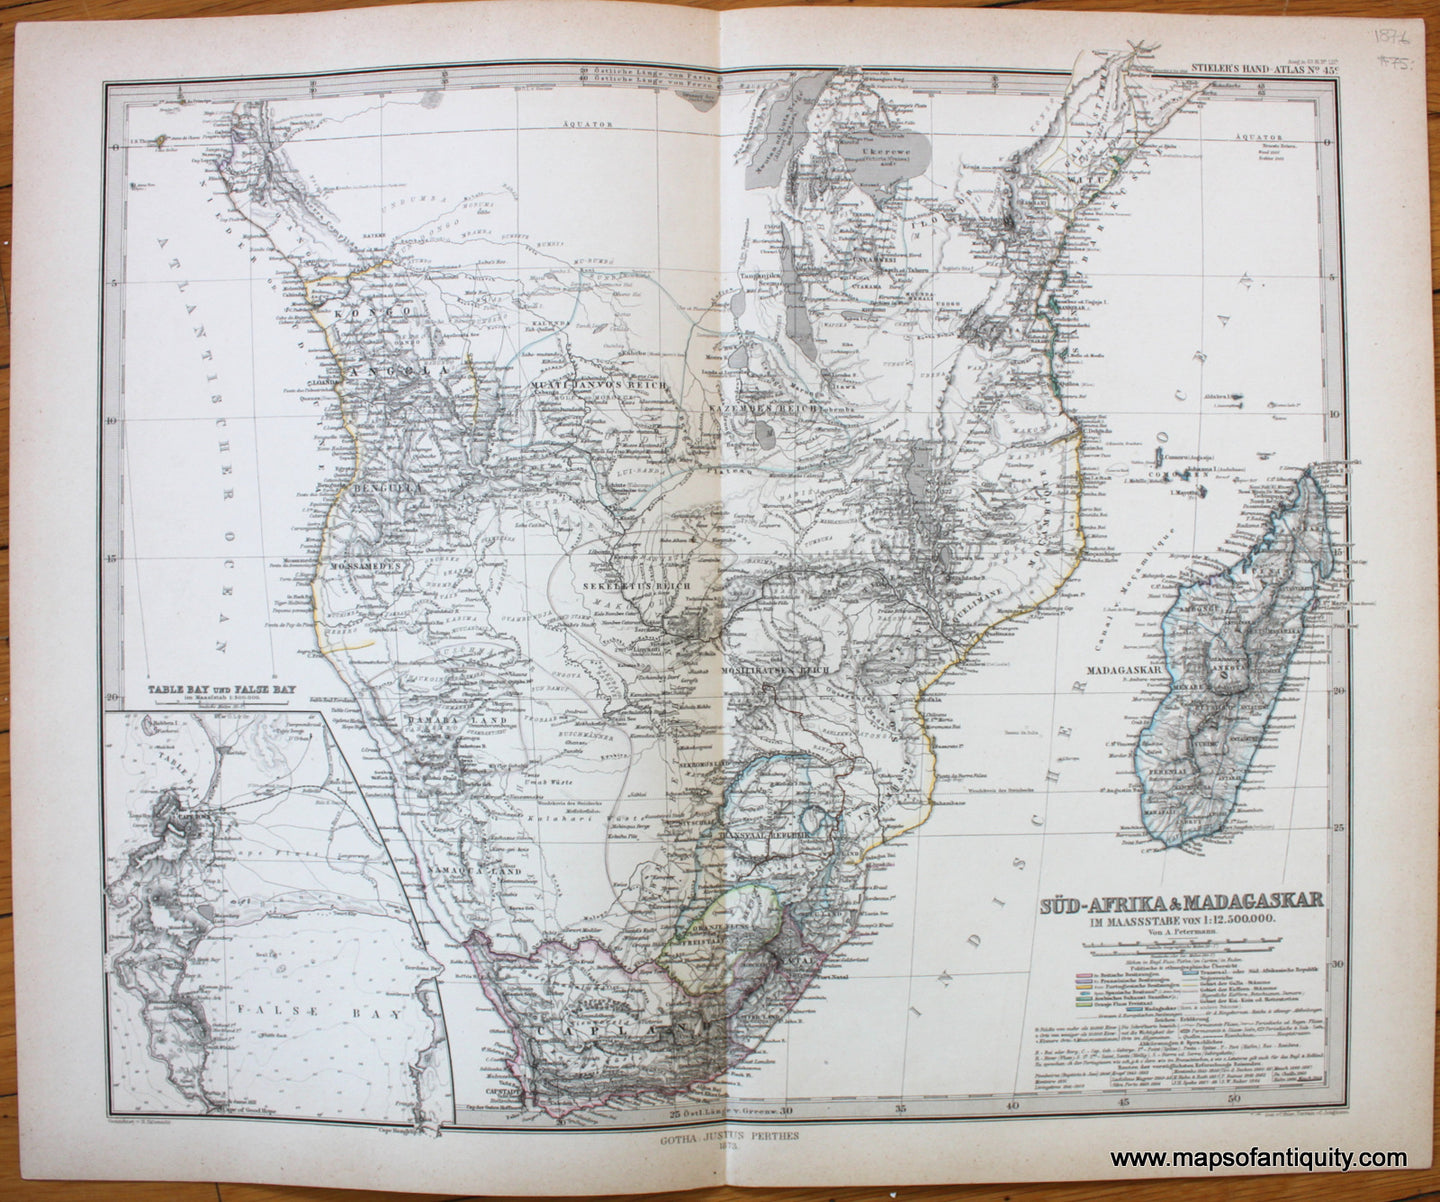 Antique-Map-Africa-South-Sud-Afrika-Madagaskar-Stieler-1876-1870s-1800s-19th-century-Maps-of-Antiquity